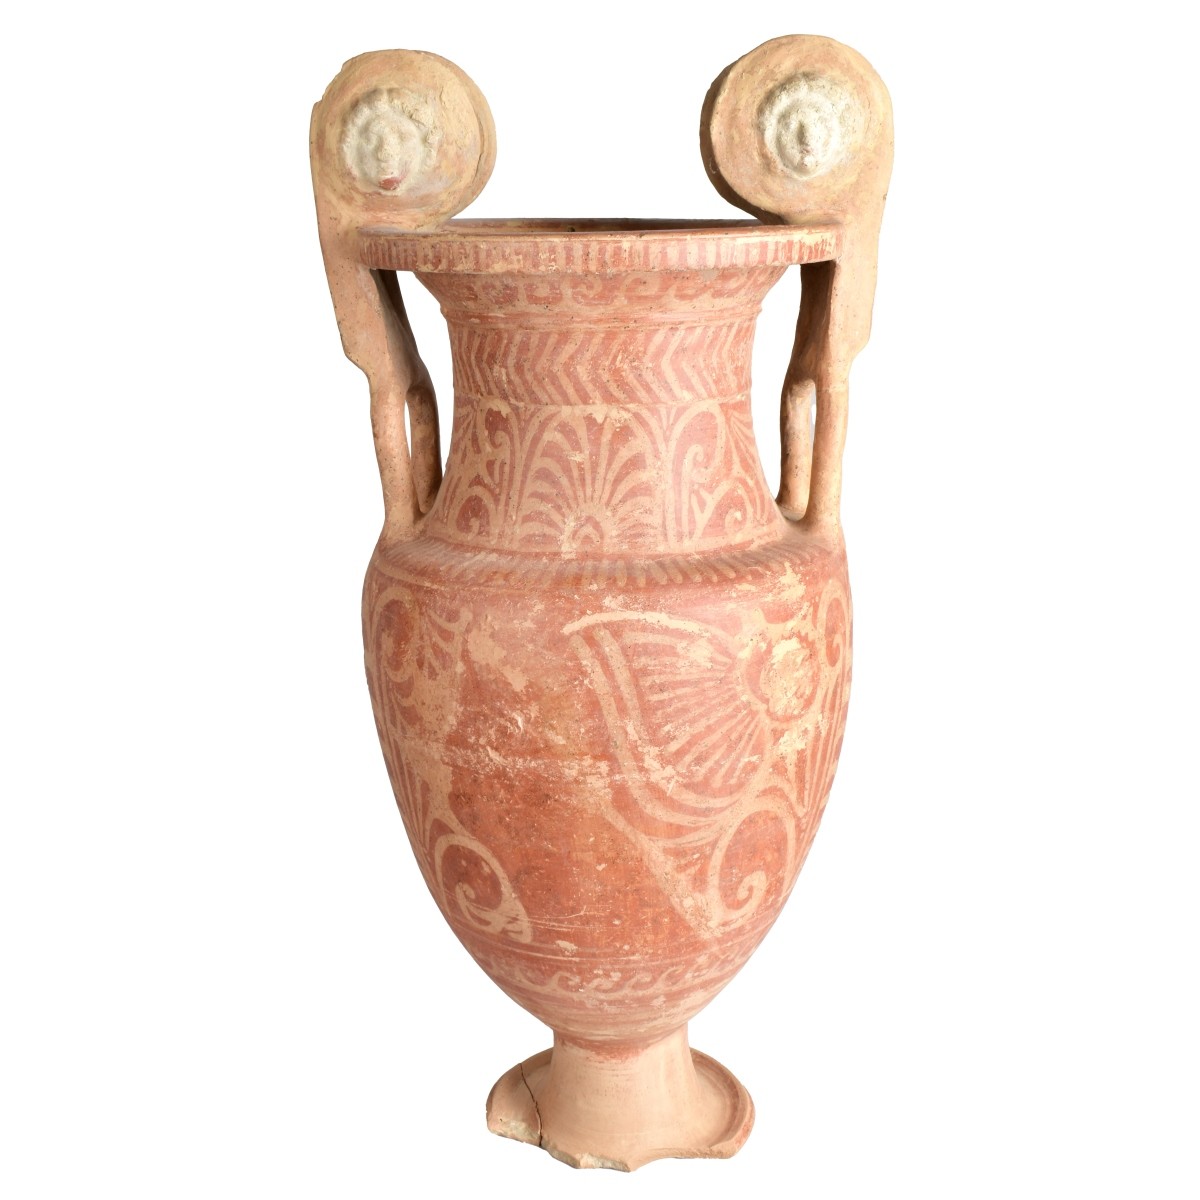 Circa 450 B.C. Greek Amphora Vase